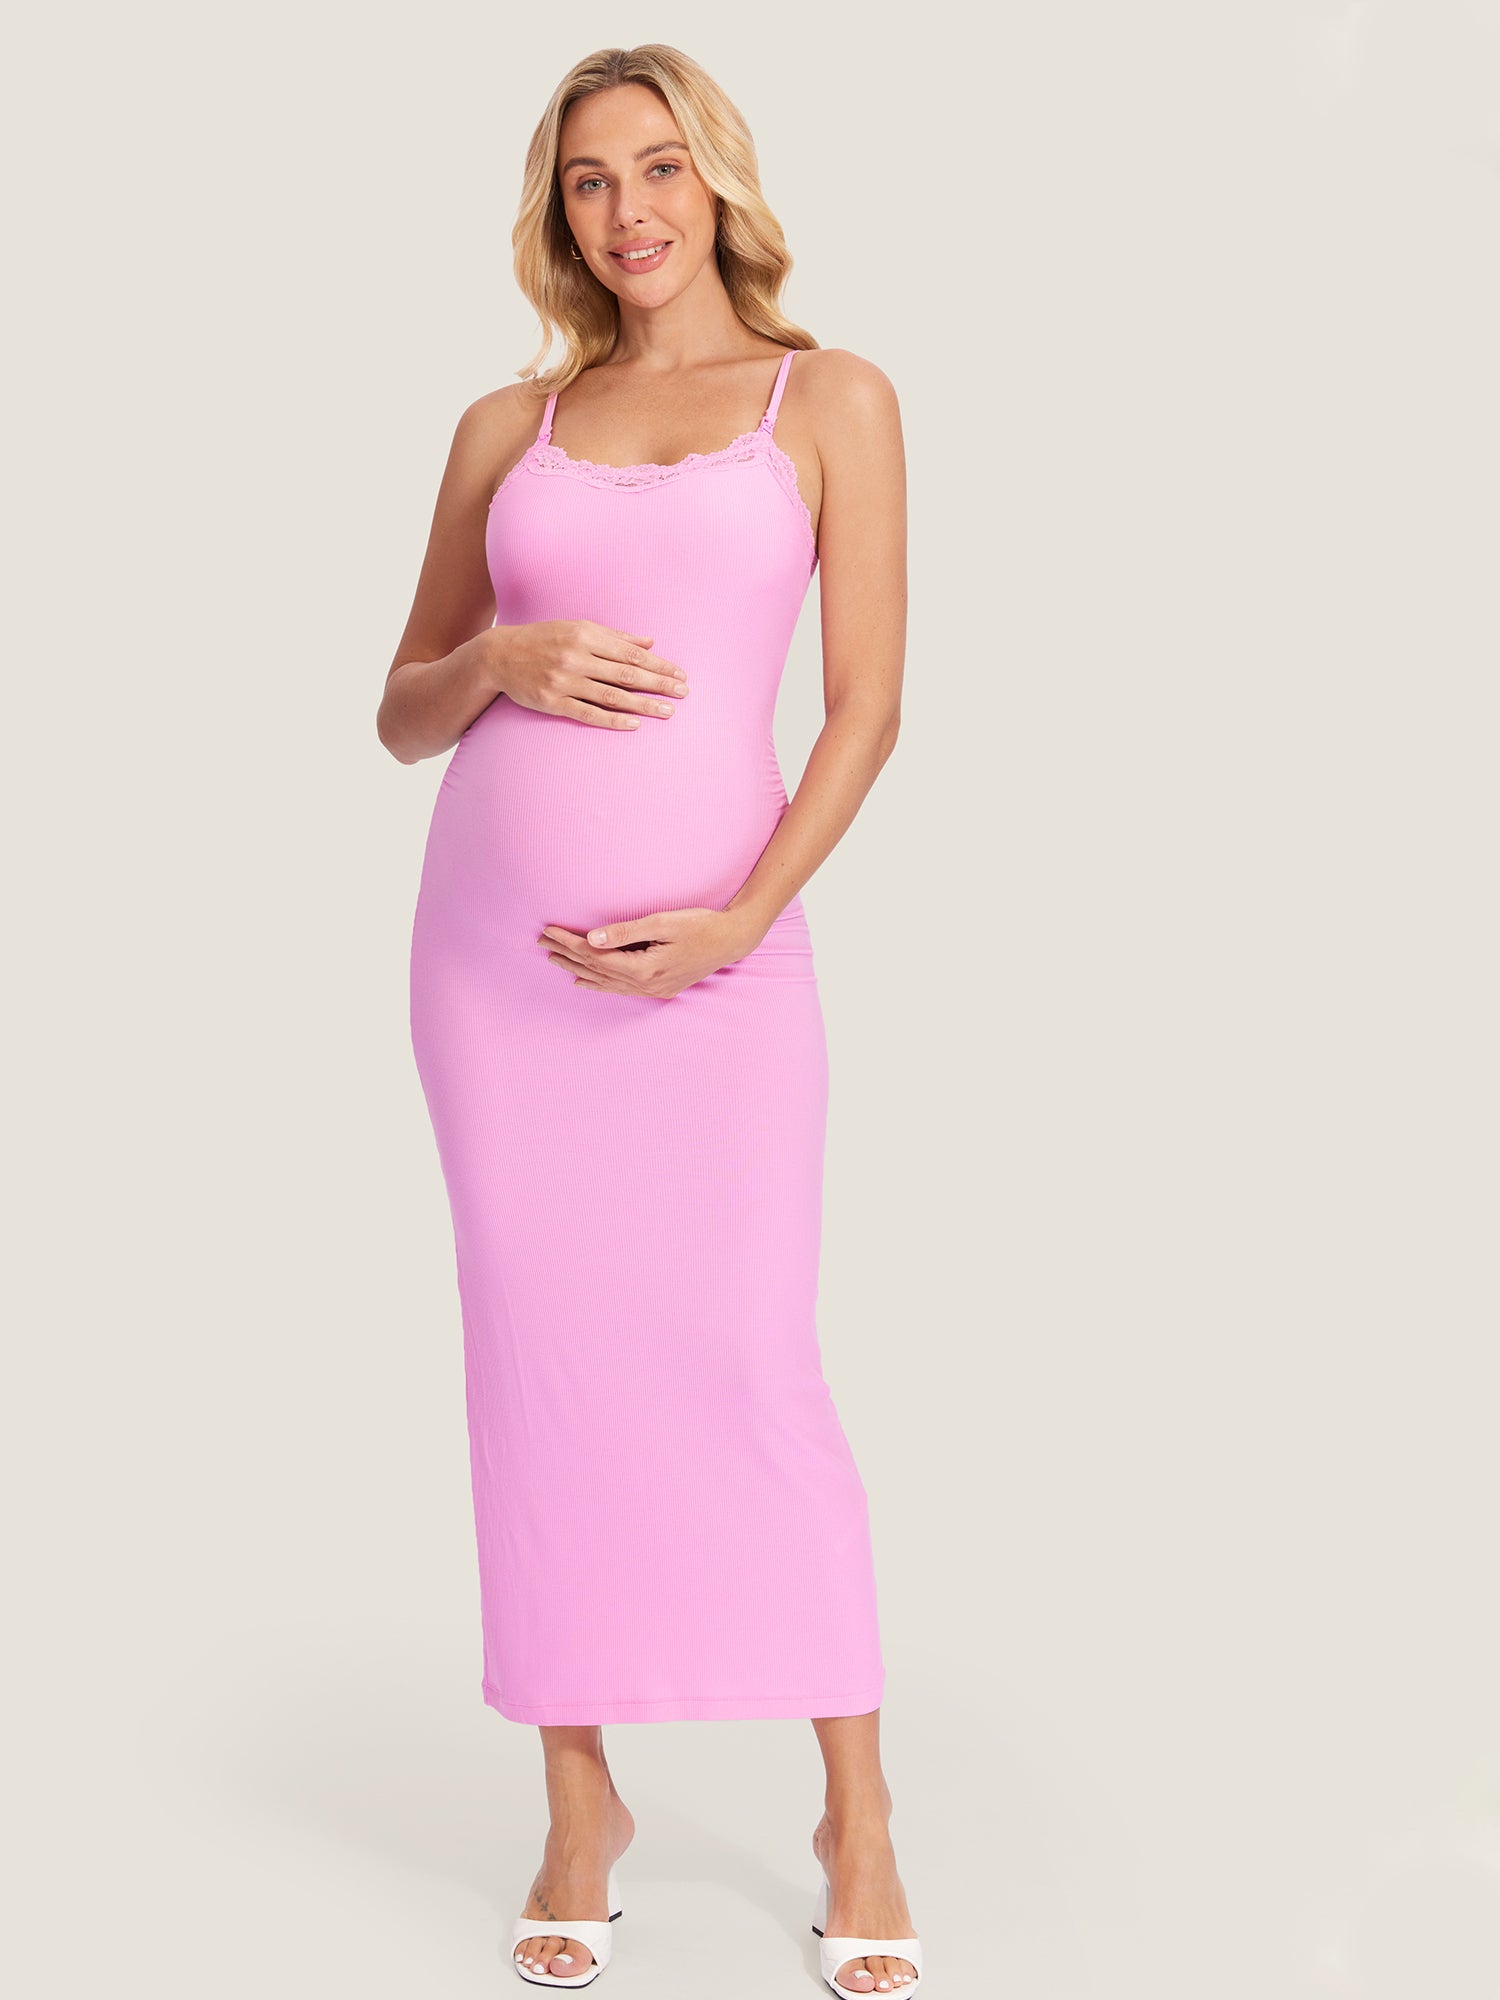 Lacy Ribbed Maternity & Nursing Dress